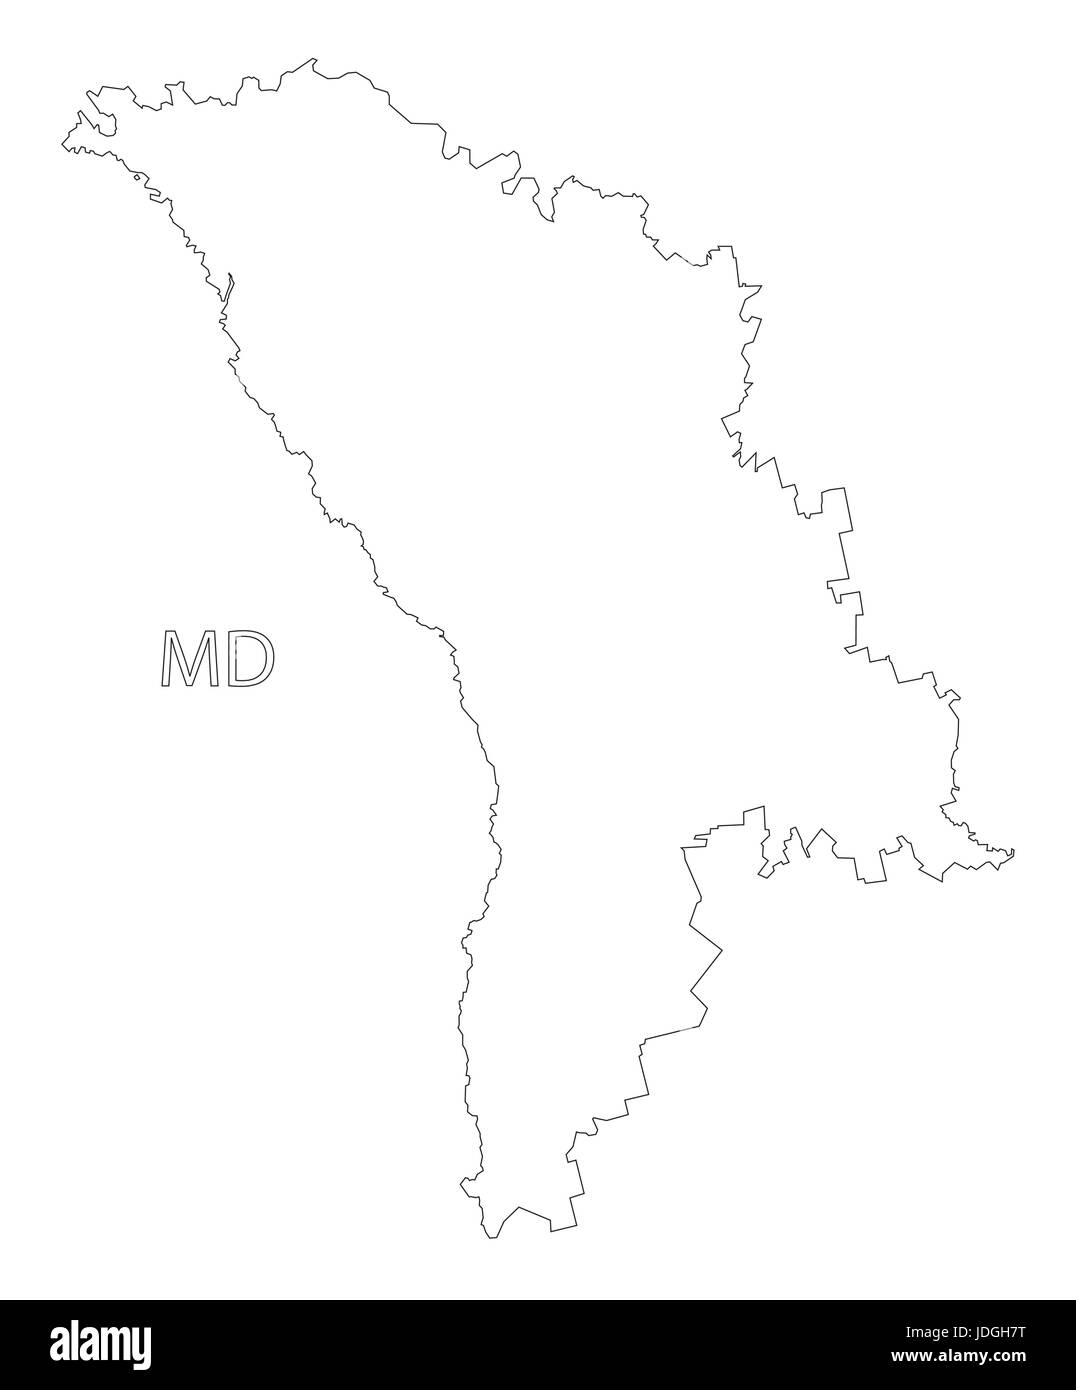 Republik Moldau Umriss Silhouette Karte Abbildung mit schwarze Form Stock Vektor